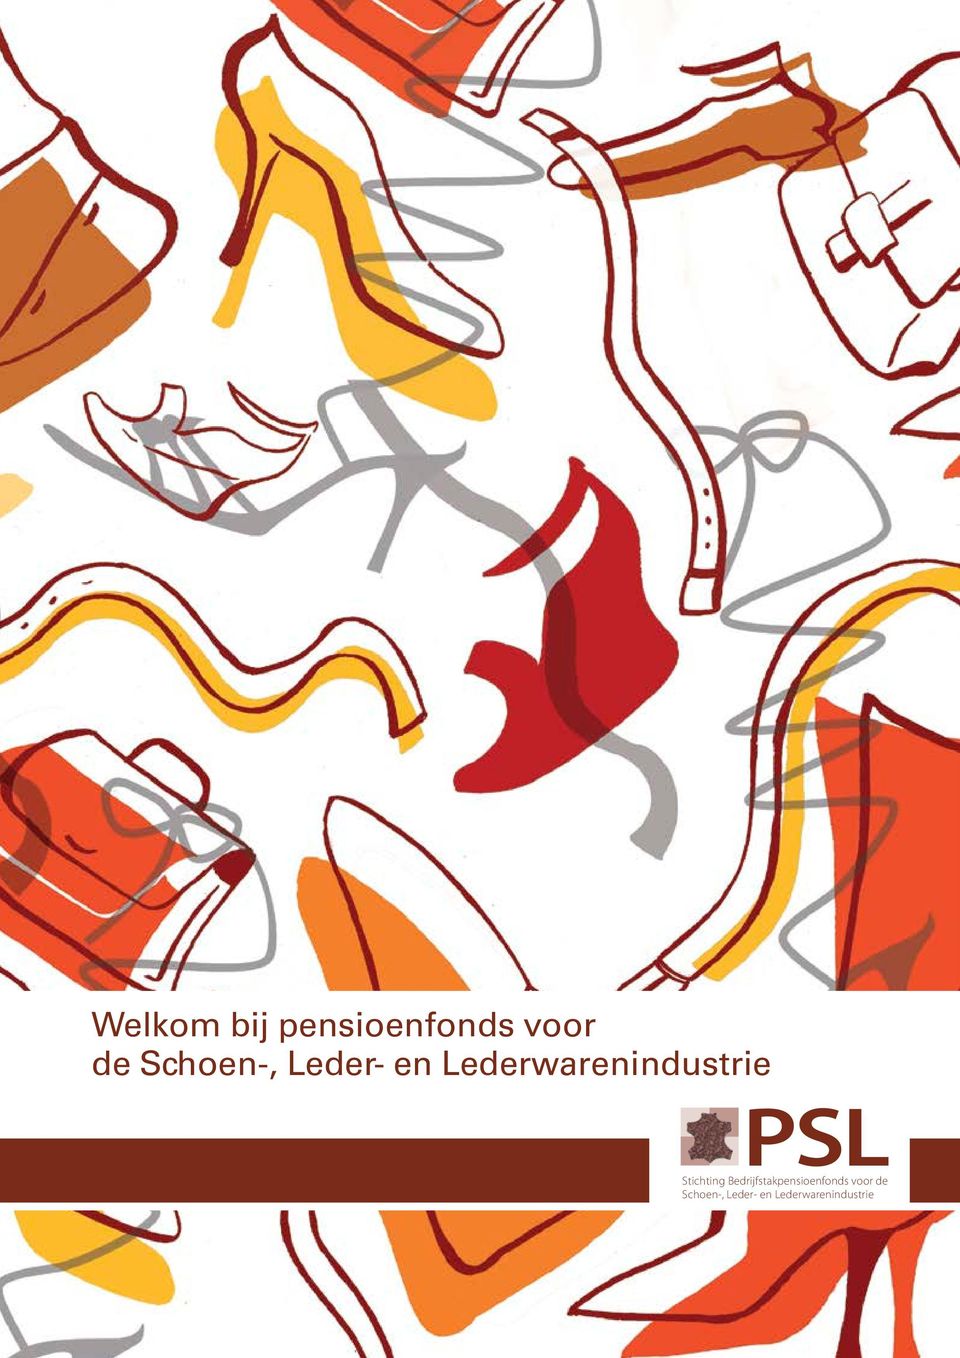 PSL Stichting Bedrijfstakpensioenfonds